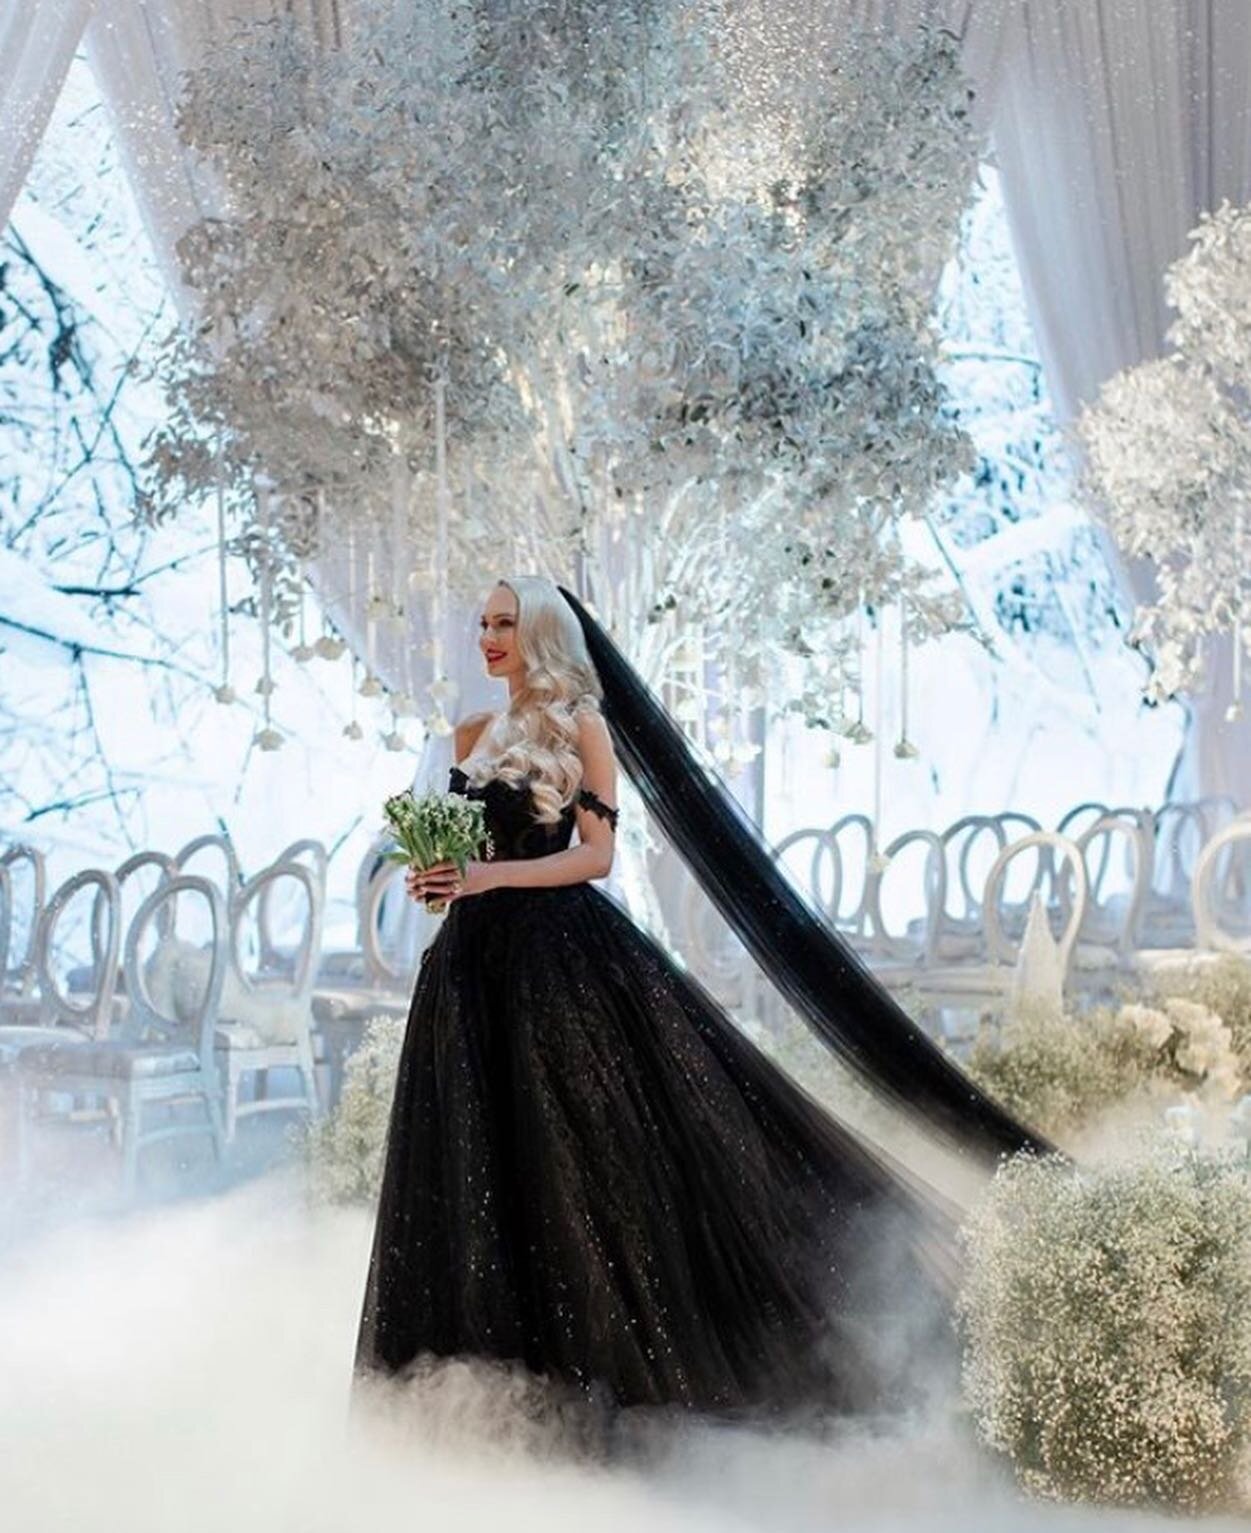 Walking into October like @thechristinequinn on her wedding day in this iconic @galialahav dress🖤🖤
.
**Wedding Inspiration Photo**
.
.
#EventsByLexx #NYWeddingPlanner #LIWeddingPlanner #NYWedding #NJWedding #Wedding #EventPlanner #WeddingInspiratio